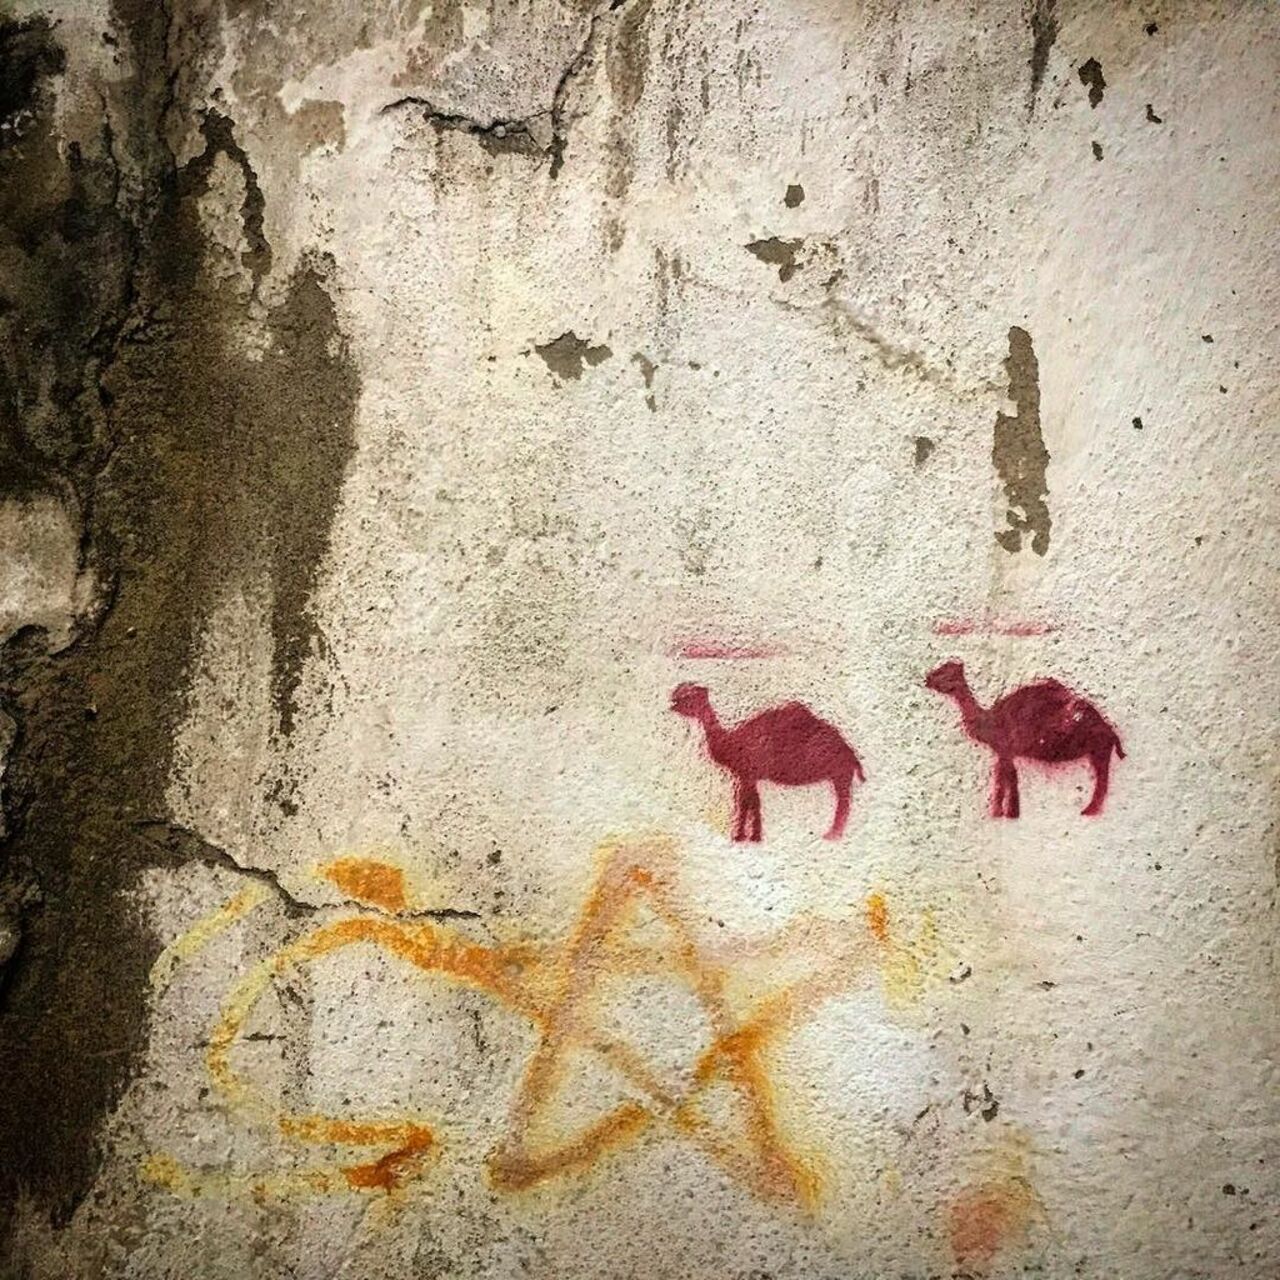 #Camel #graffiti #art #streetart #sanat #sokak #Istanbul #Turkey #türkiye #street https://t.co/rM9Jcccdnv